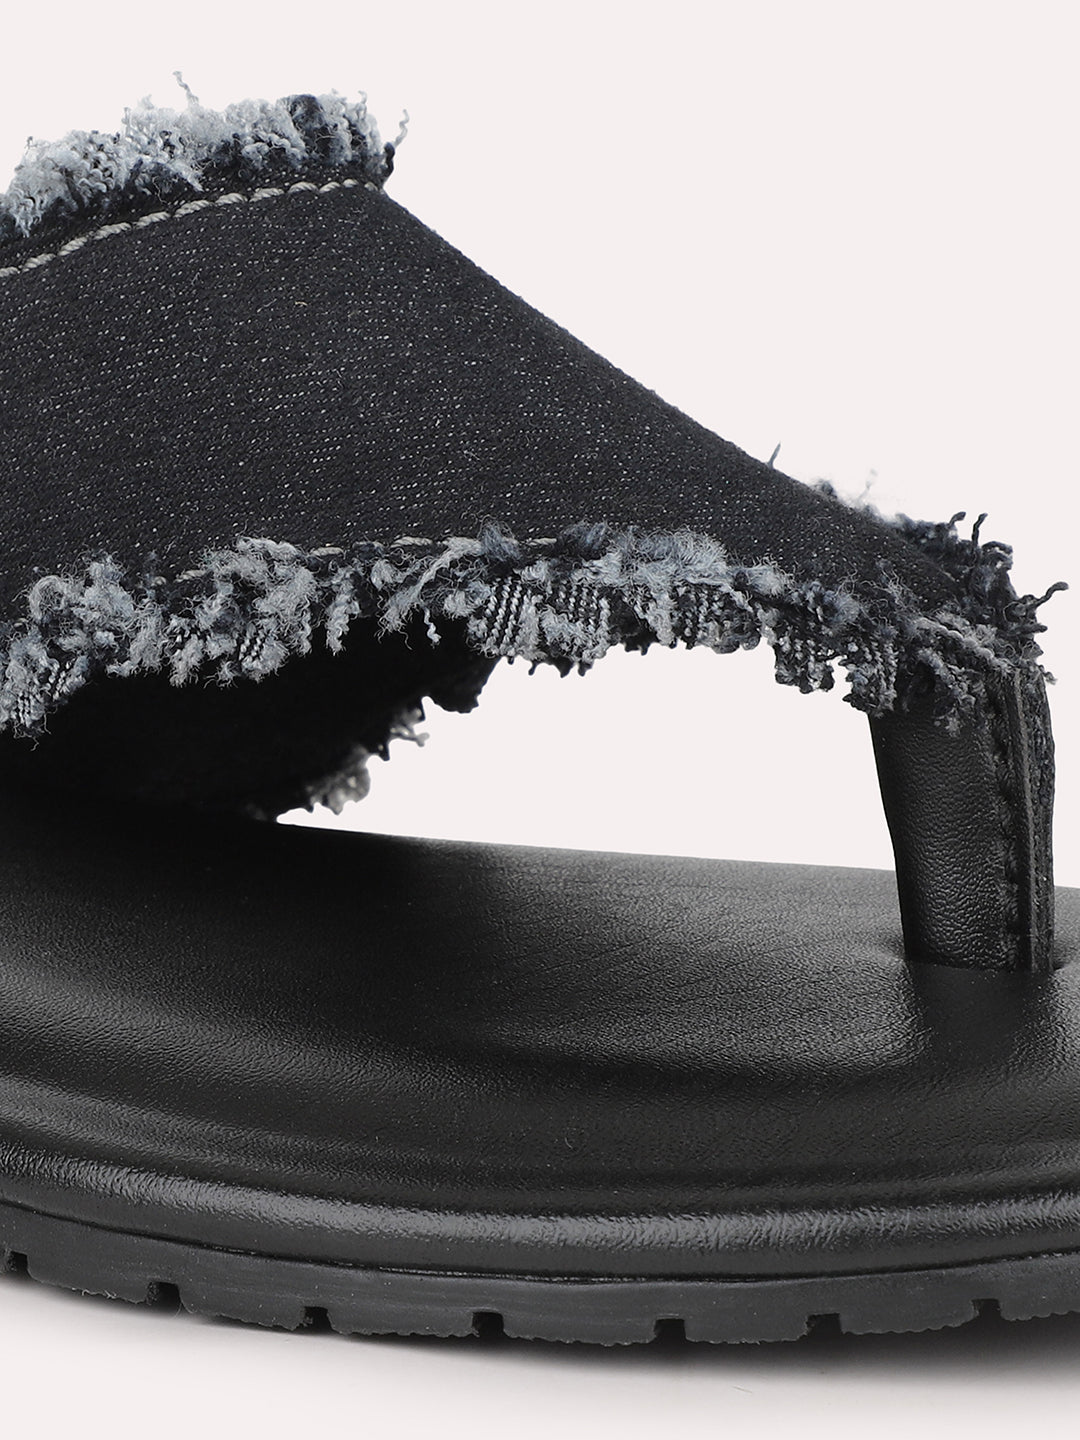 Privo Black Denim T-strap Causal Sandal For Men